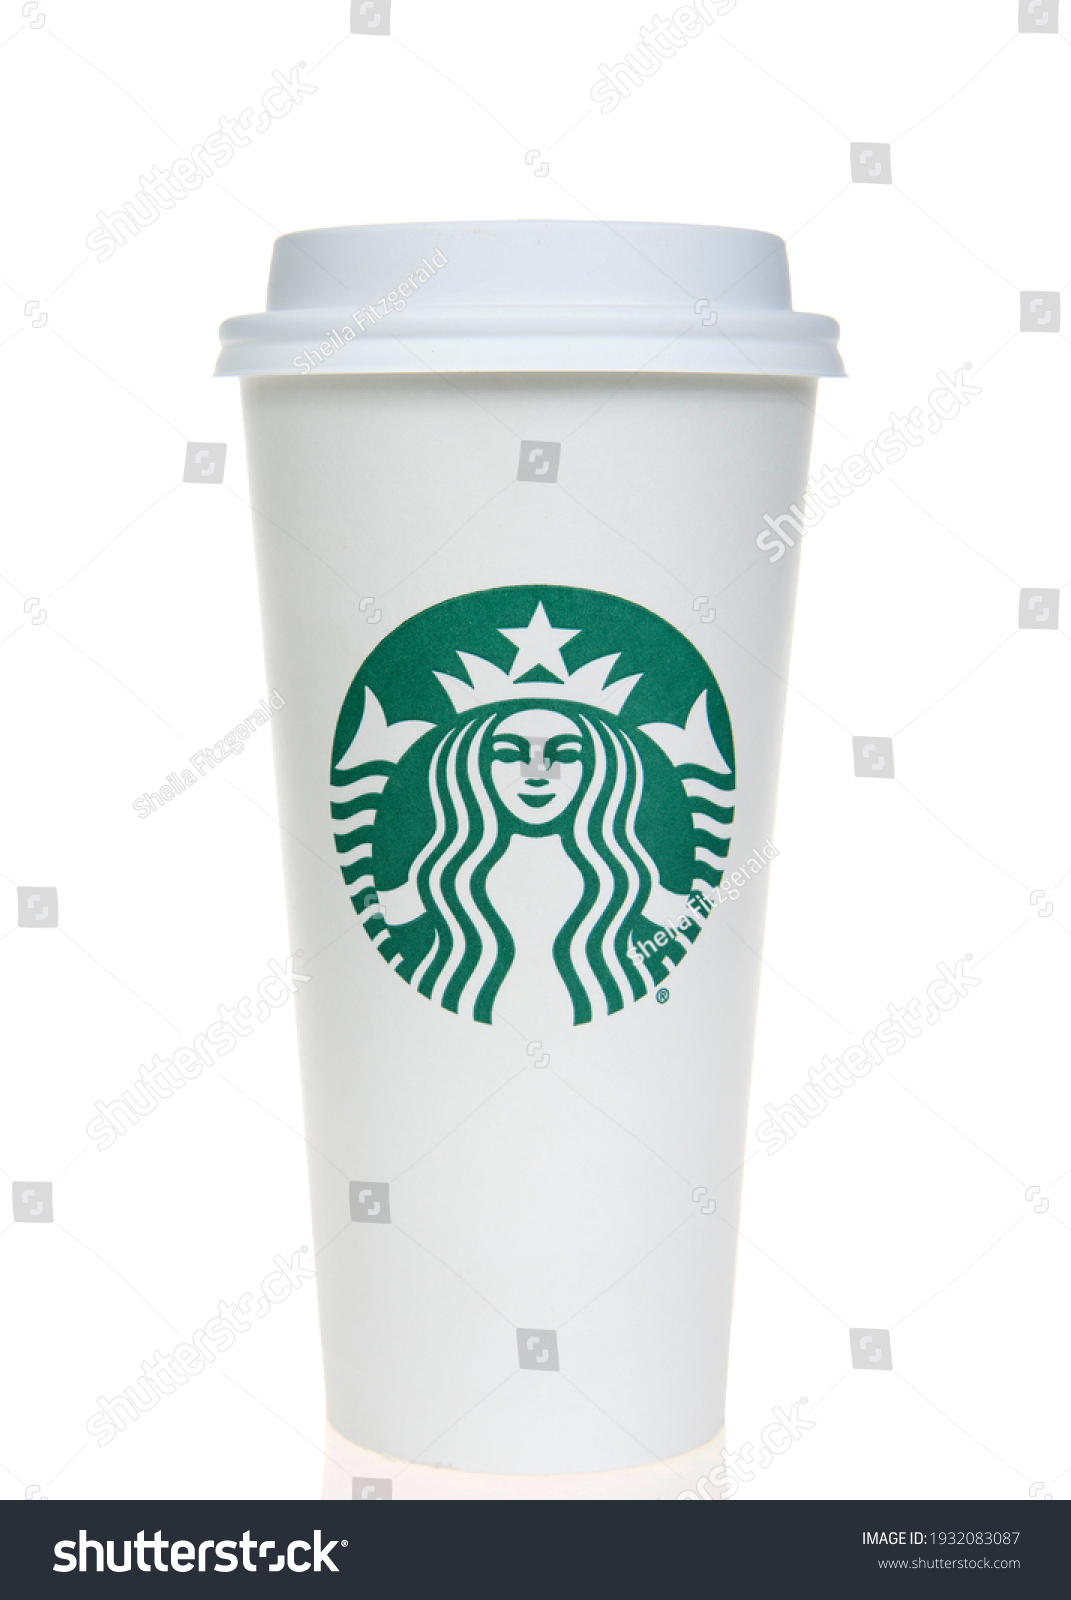 334 Starbucks venti Images, Stock Photos & Vectors | Shutterstock